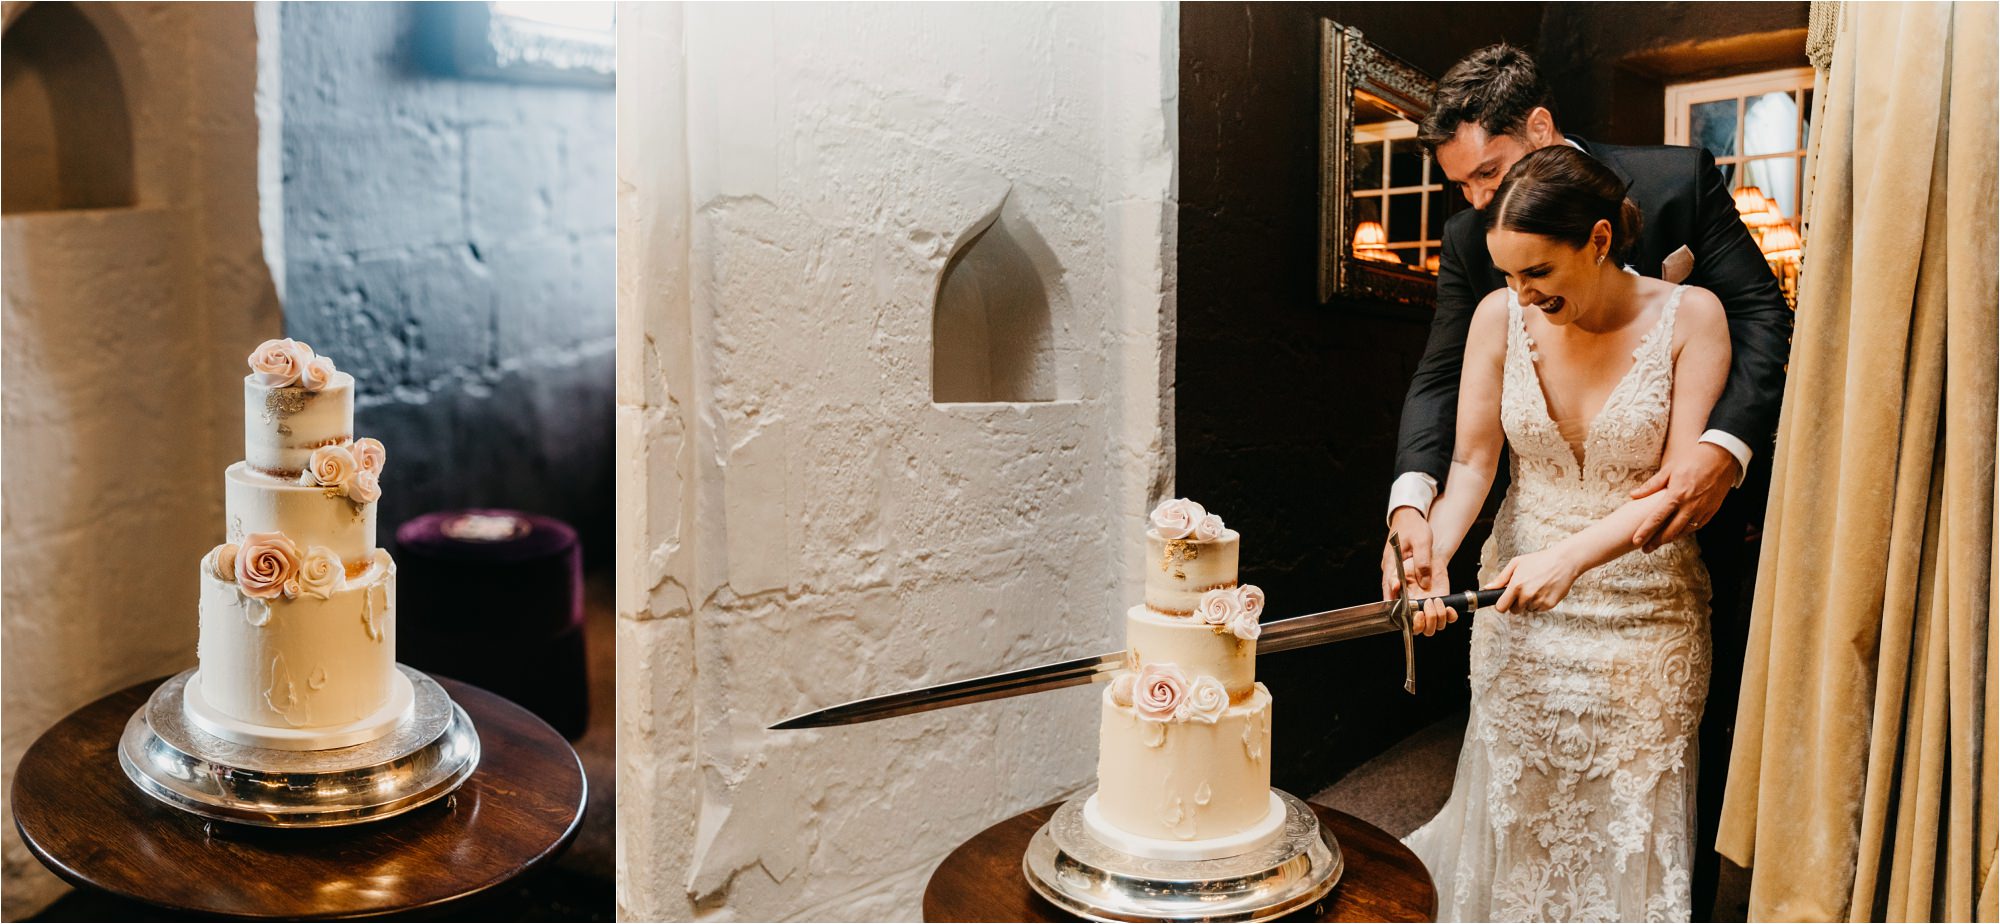 borthwick castle micro wedding cake cutting bride groom sword